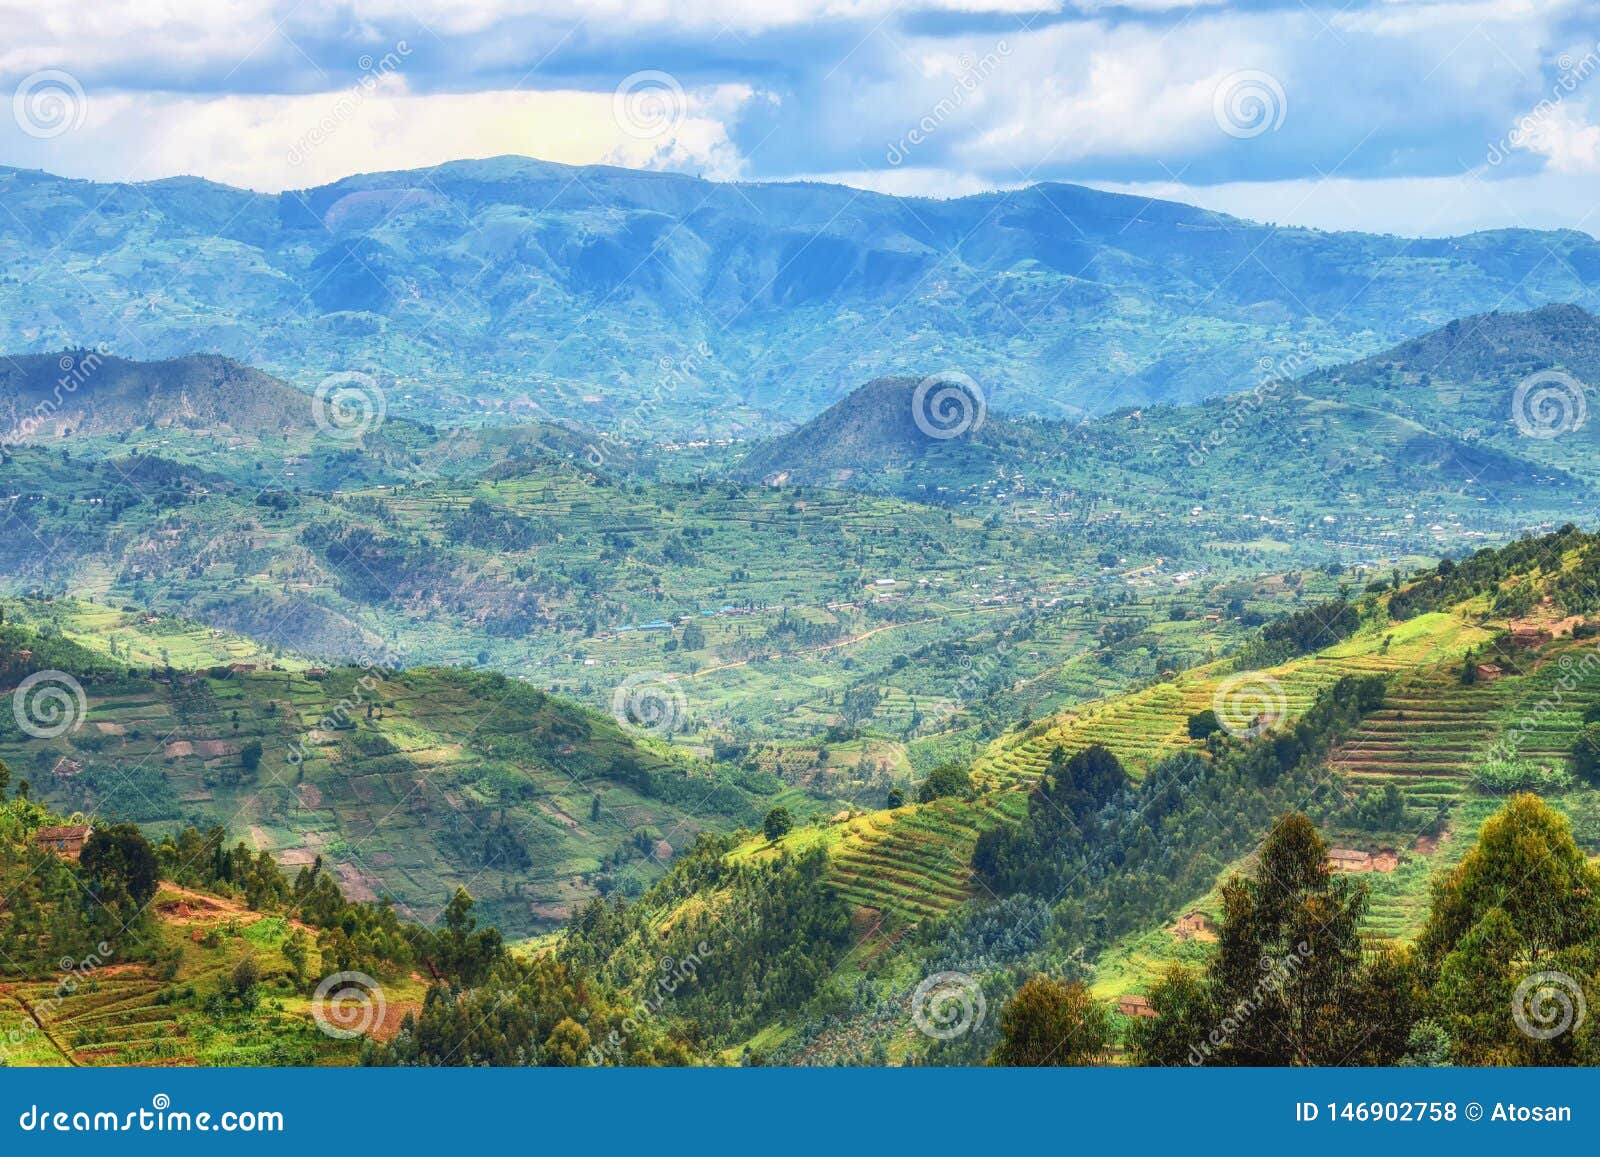 rural landscape rwanda